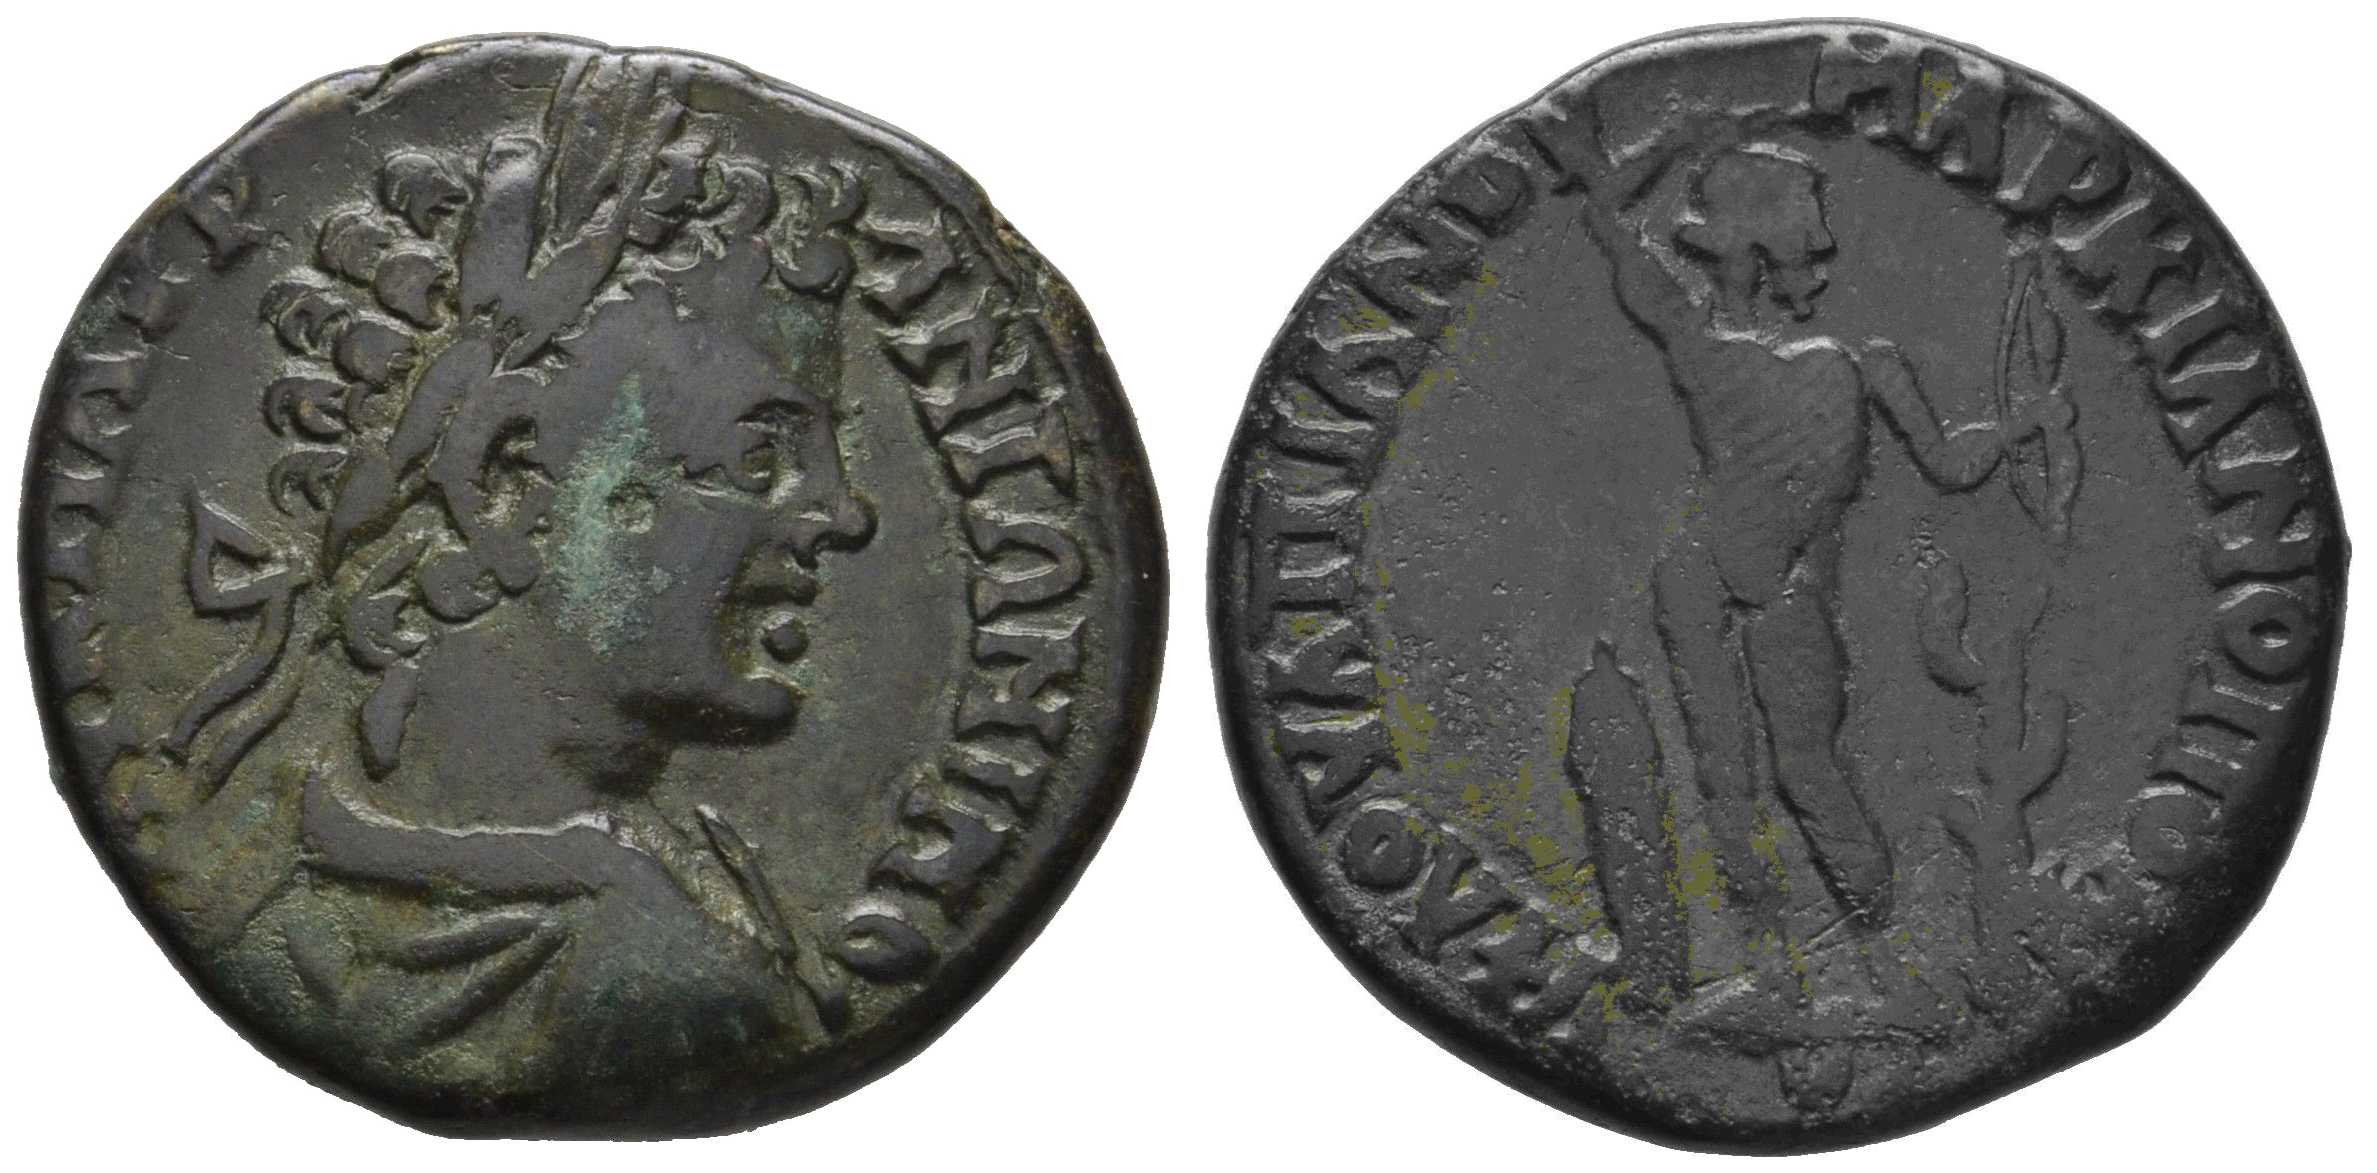 5904 Marcianopolis Moesia Inferior Caracalla AE